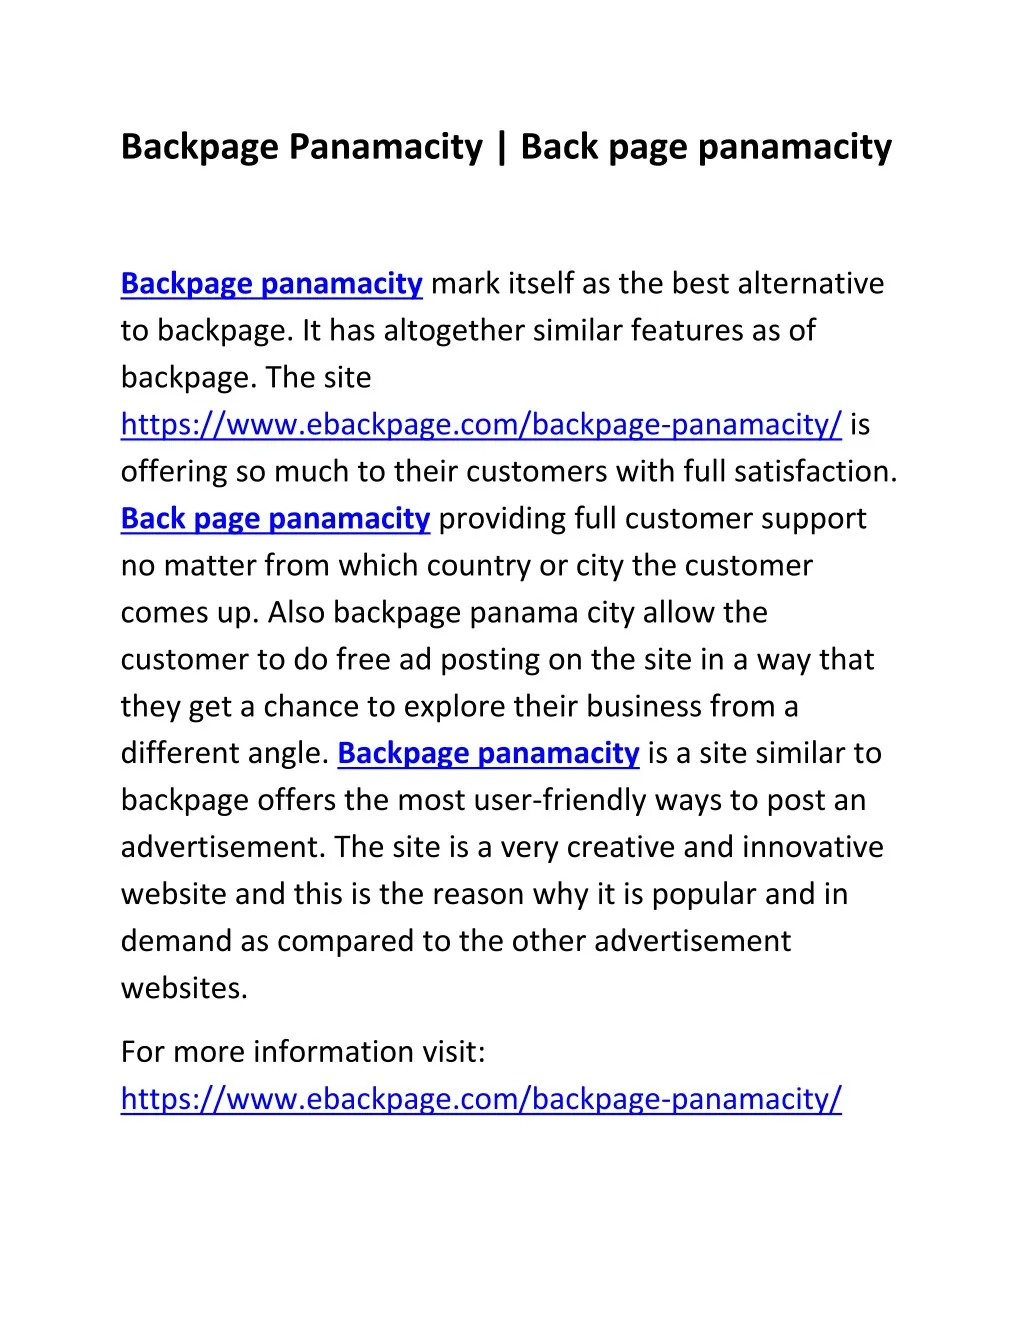 backpage panamacity back page panamacity